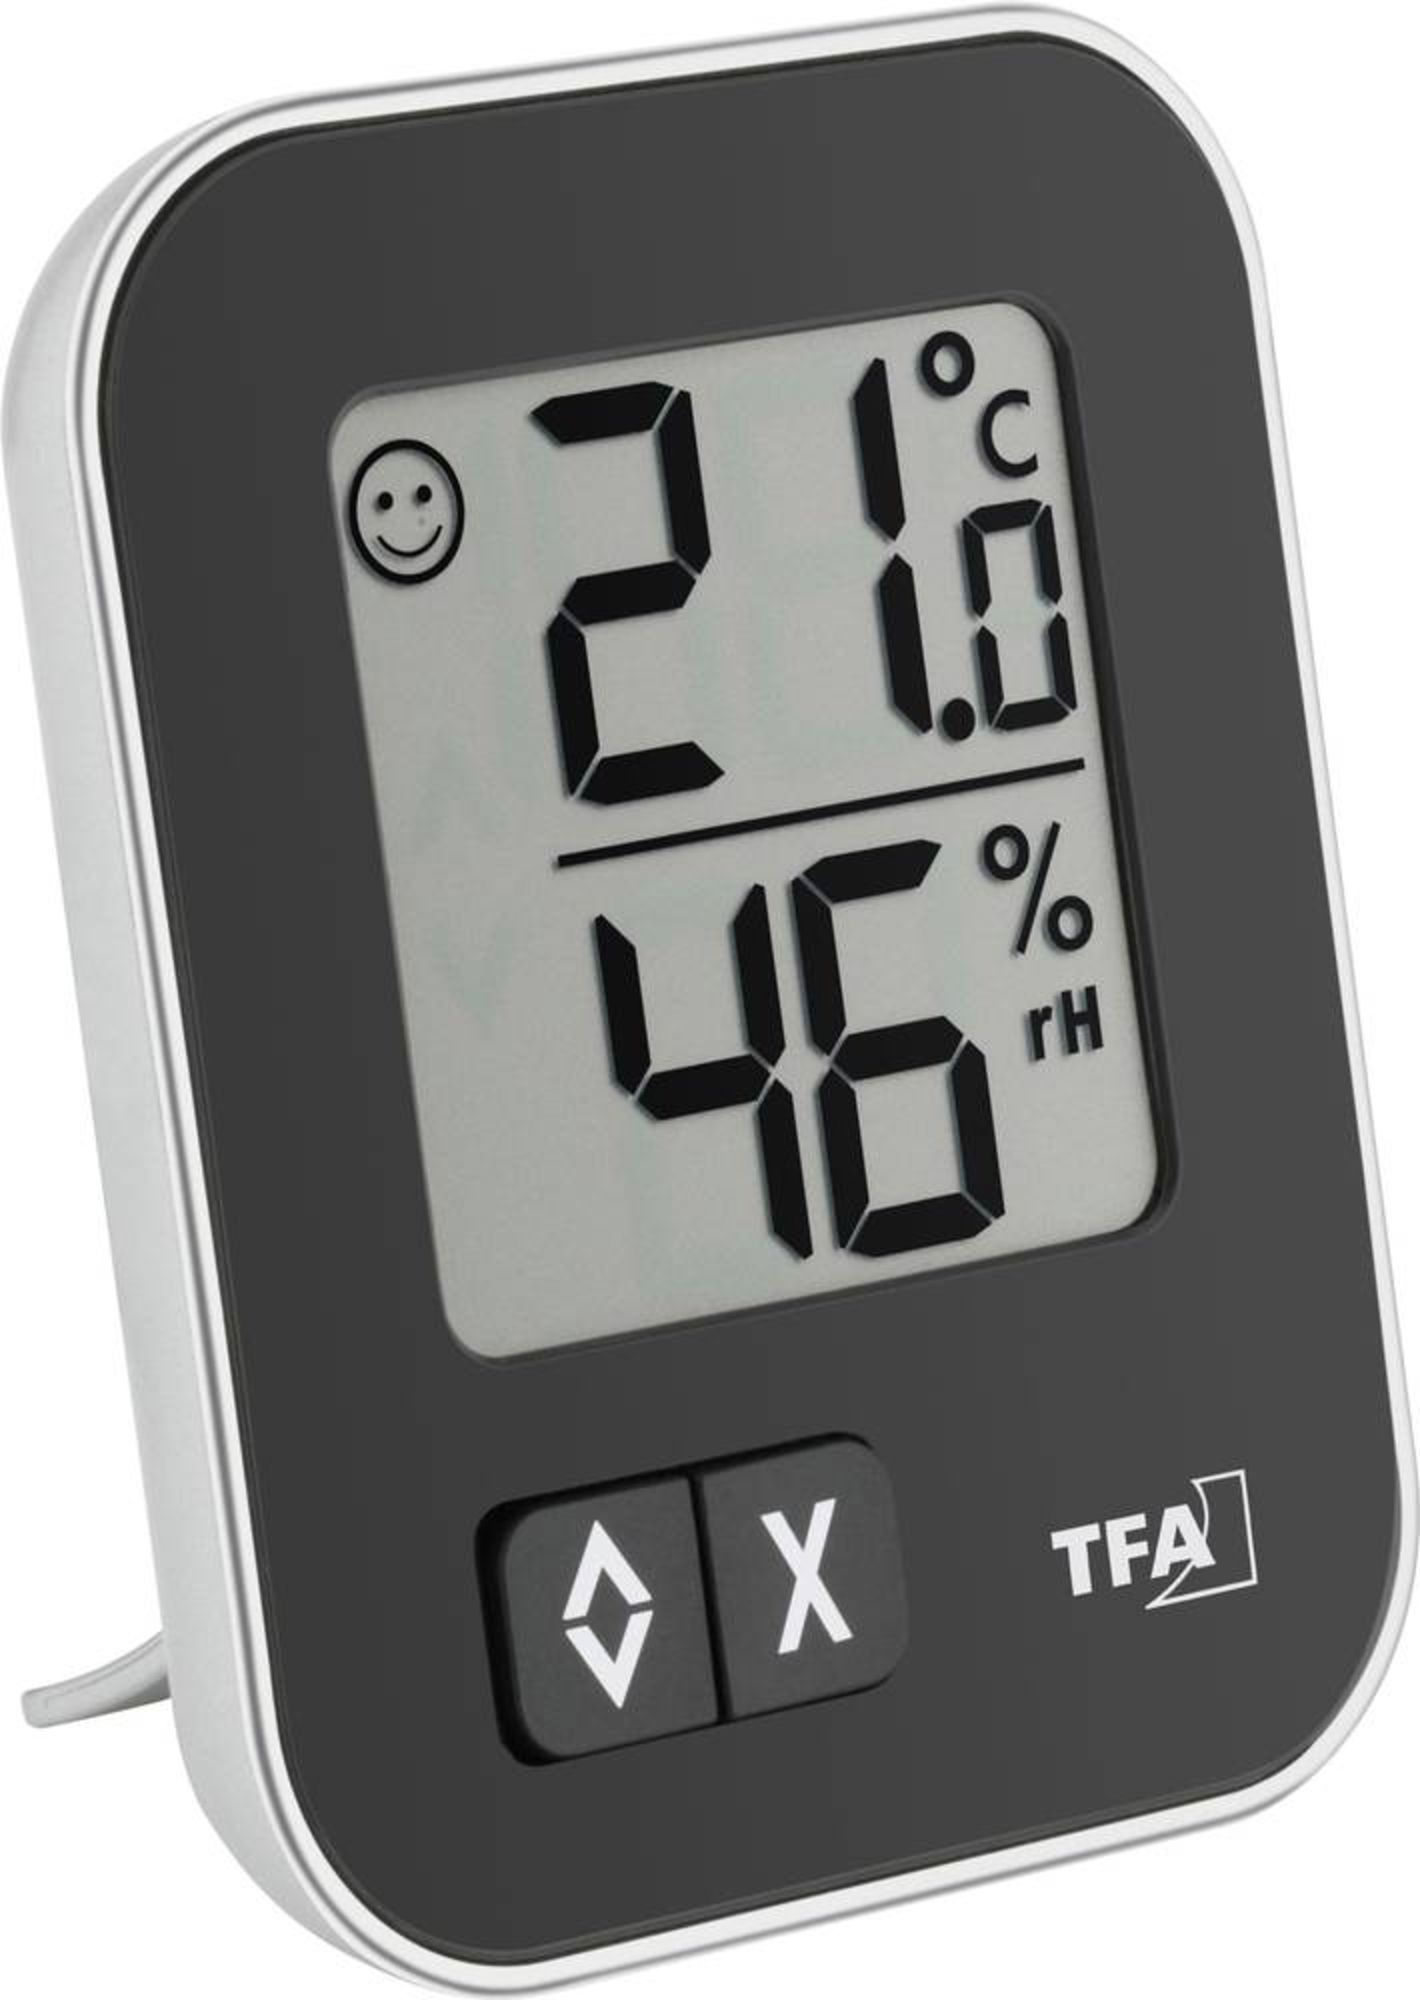 TFA Dostmann 30.5026.01 Luftfeuchtemessgerät (Hygrometer) 20% rF 99% rF  online bestellen